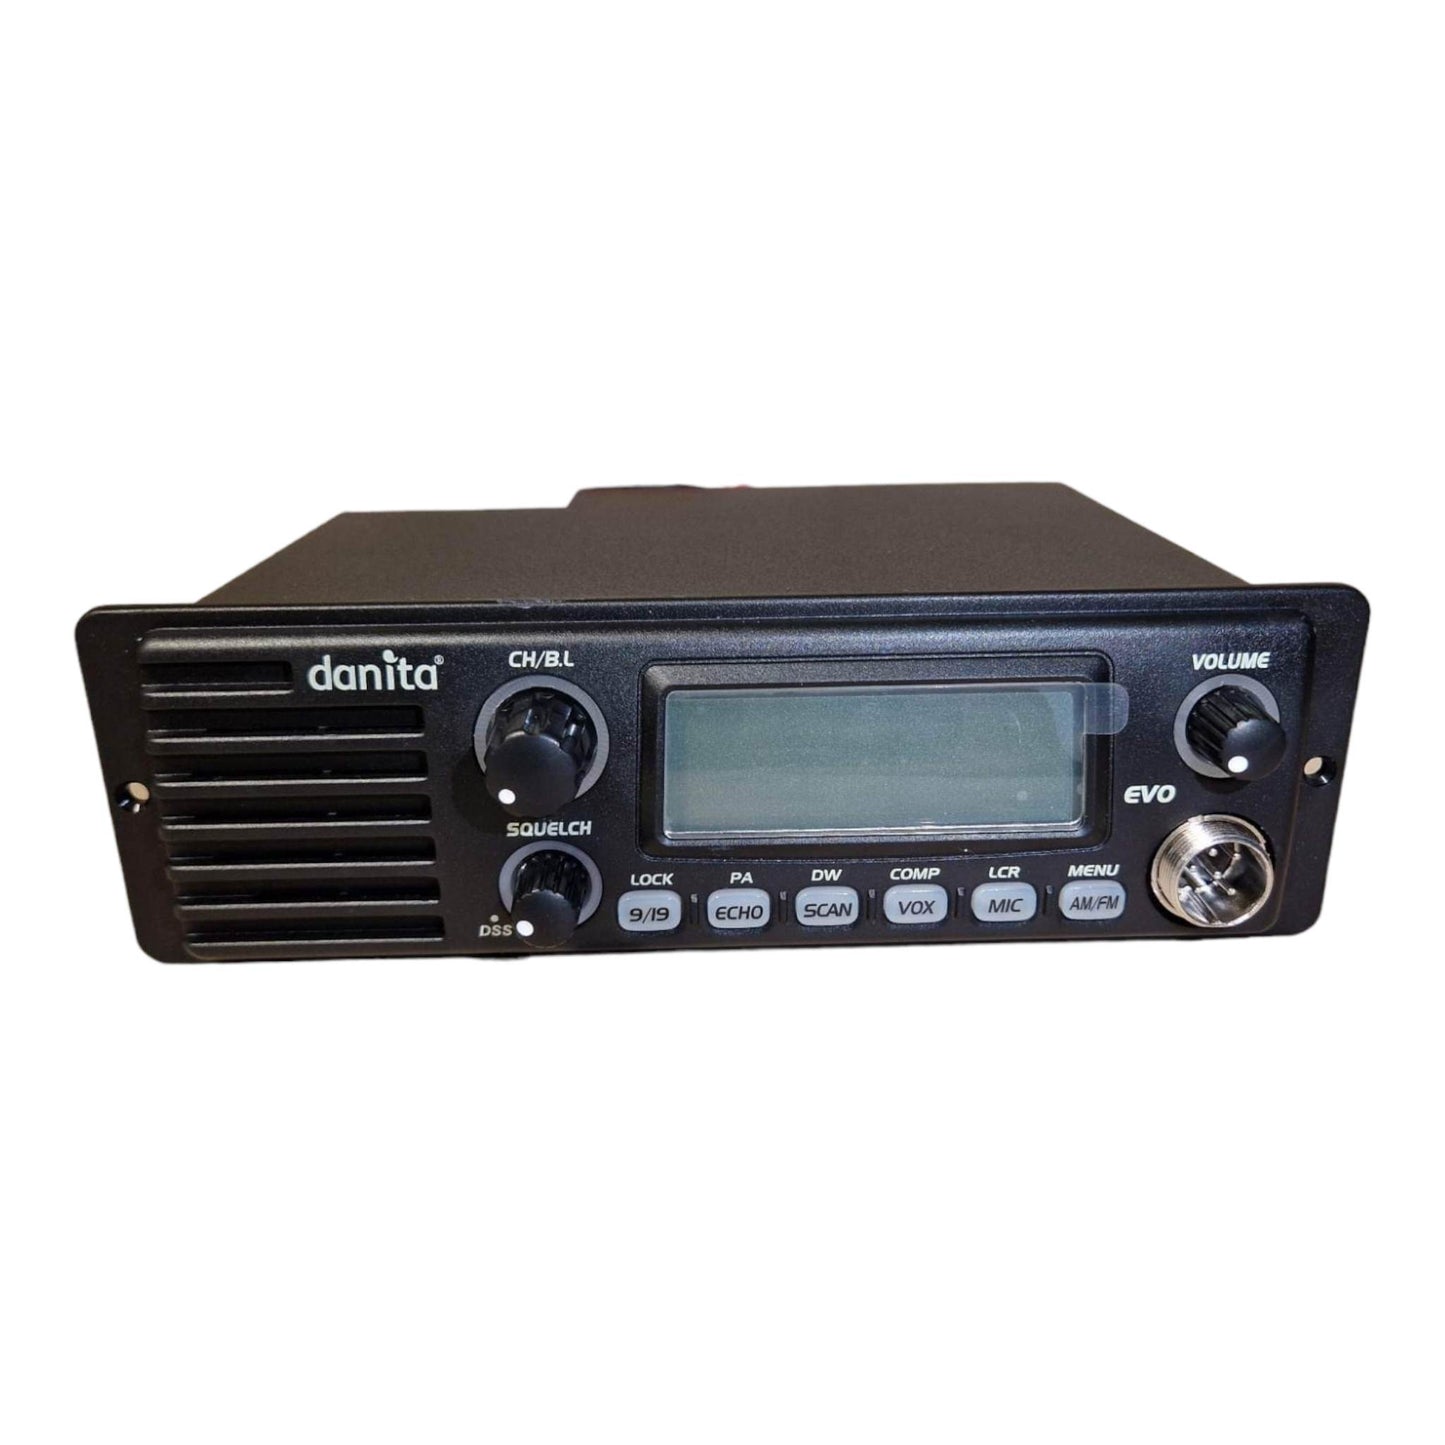 Danita 840 Evo CB-Radio m/ DIN Brakett 12/24 Volt